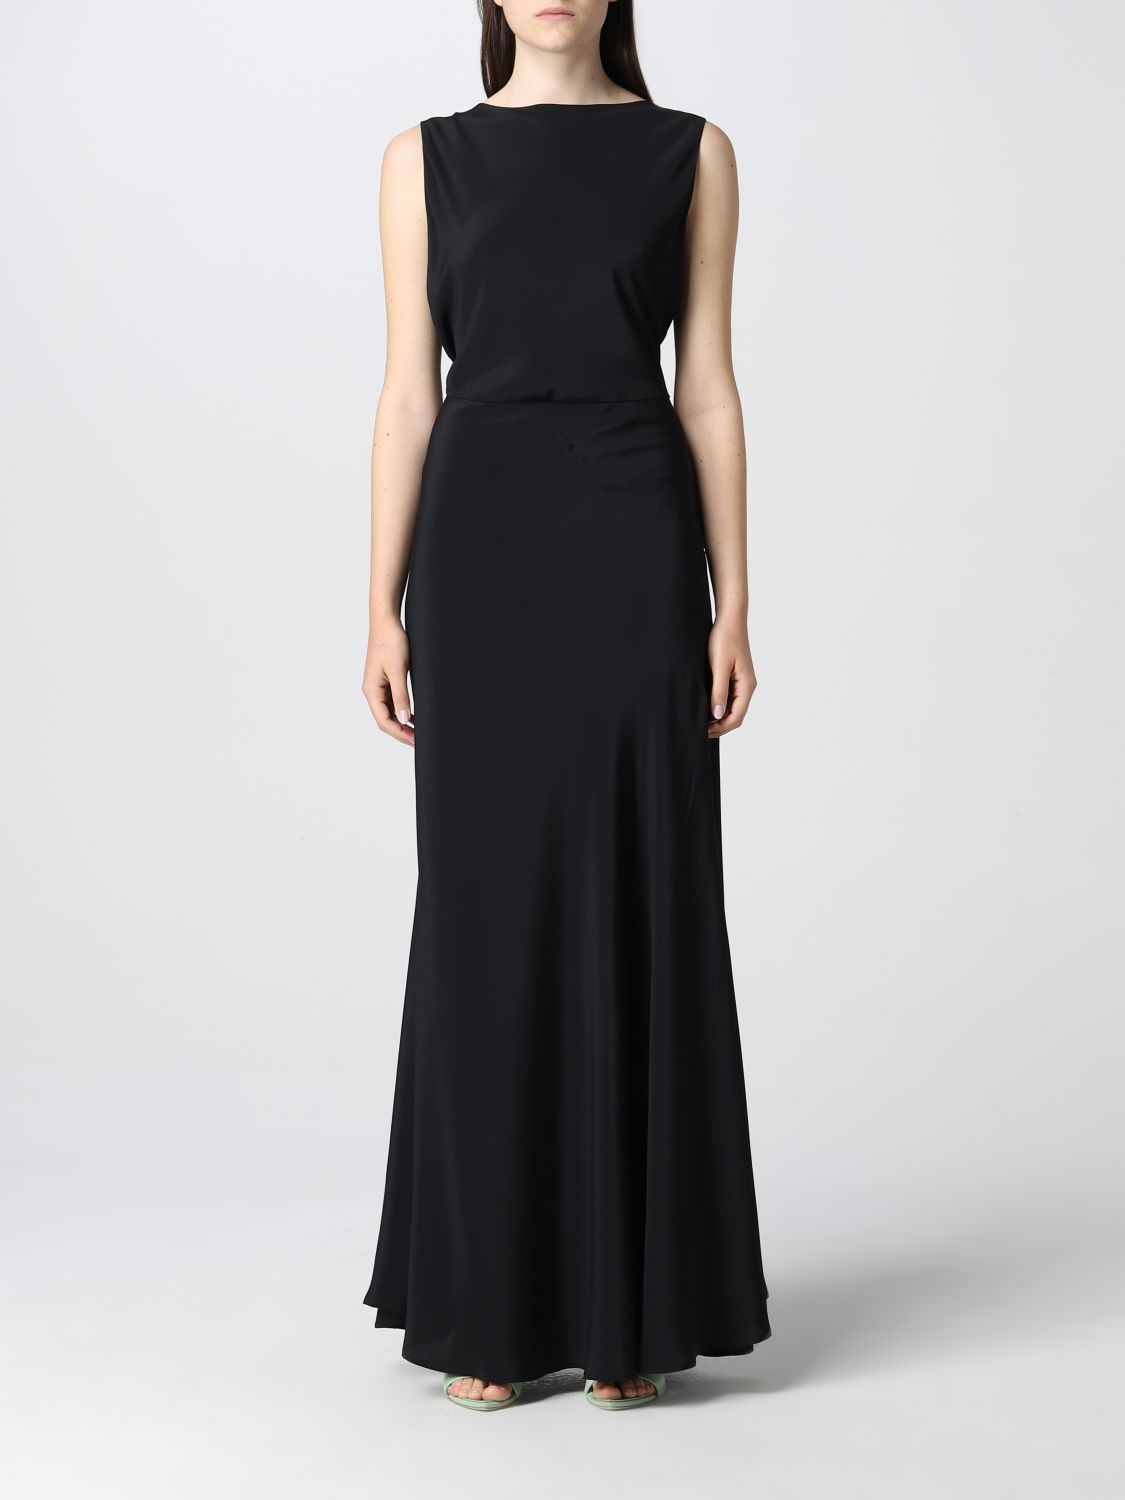 ERIKA CAVALLINI: dress for women - Black | Erika Cavallini dress P2ST13 ...